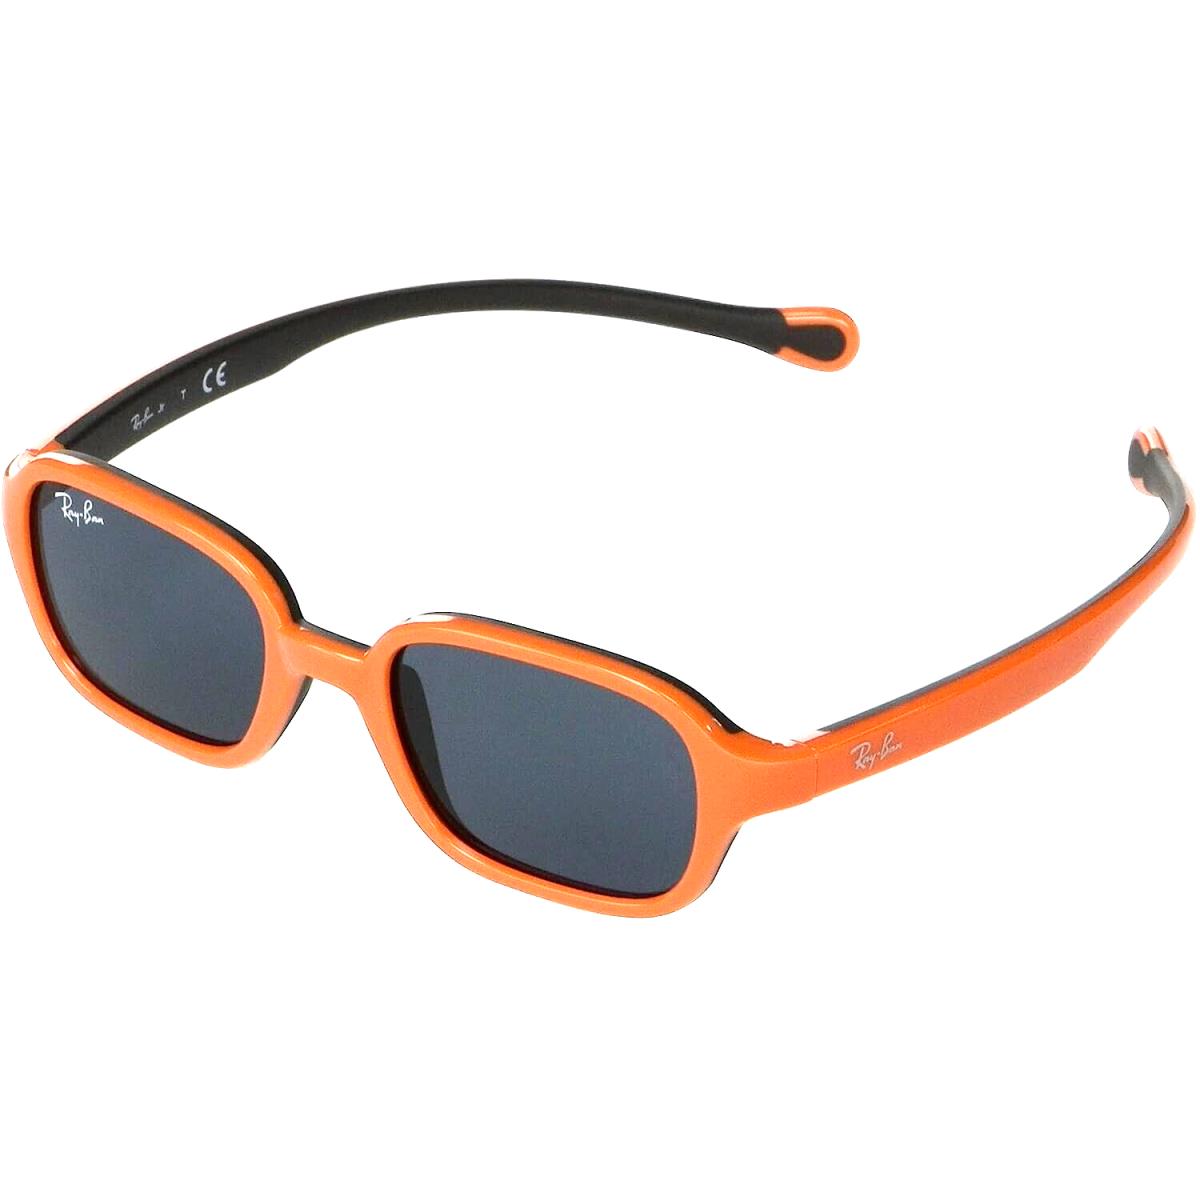 Ray Ban Kids RJ9074S 7095/87 Orange Sunglasses 39-16-120 W/case - Orange Frame, Gray Lens